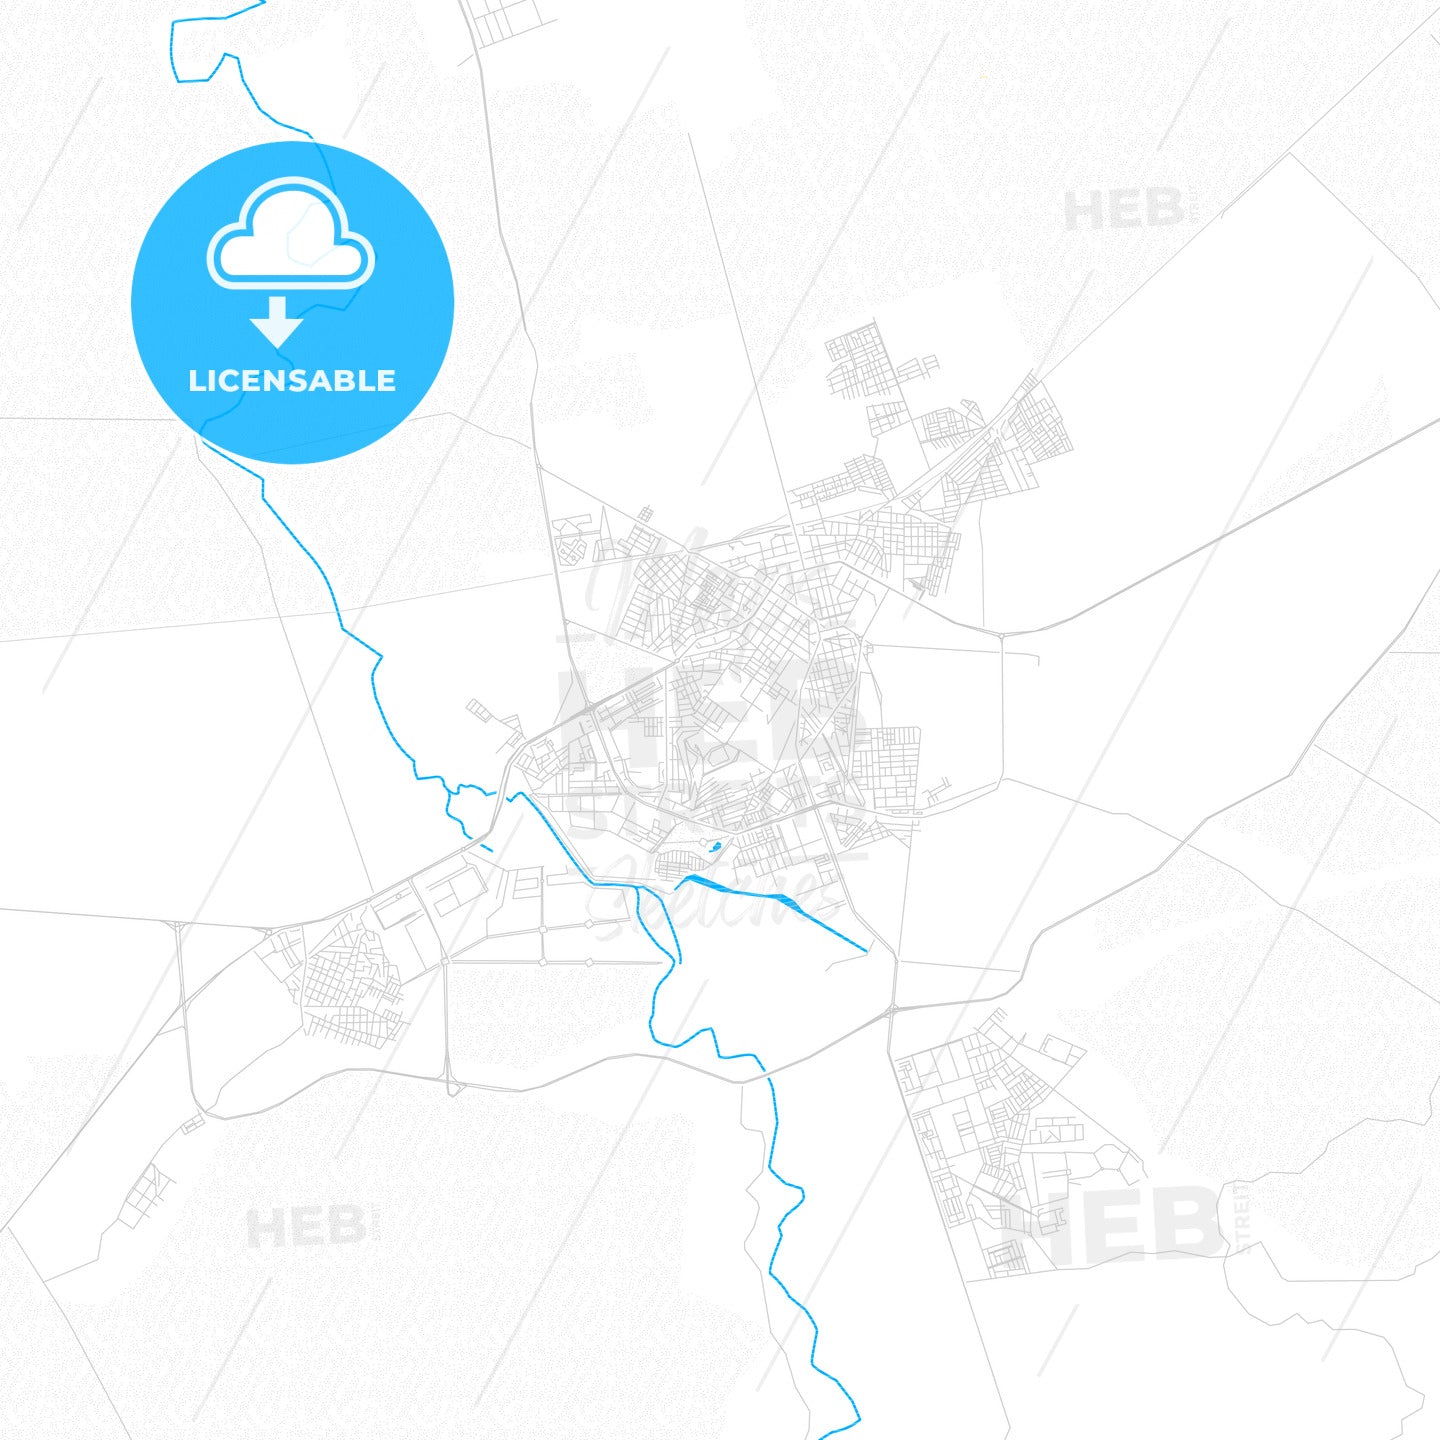 Relizane, Algeria PDF vector map with water in focus